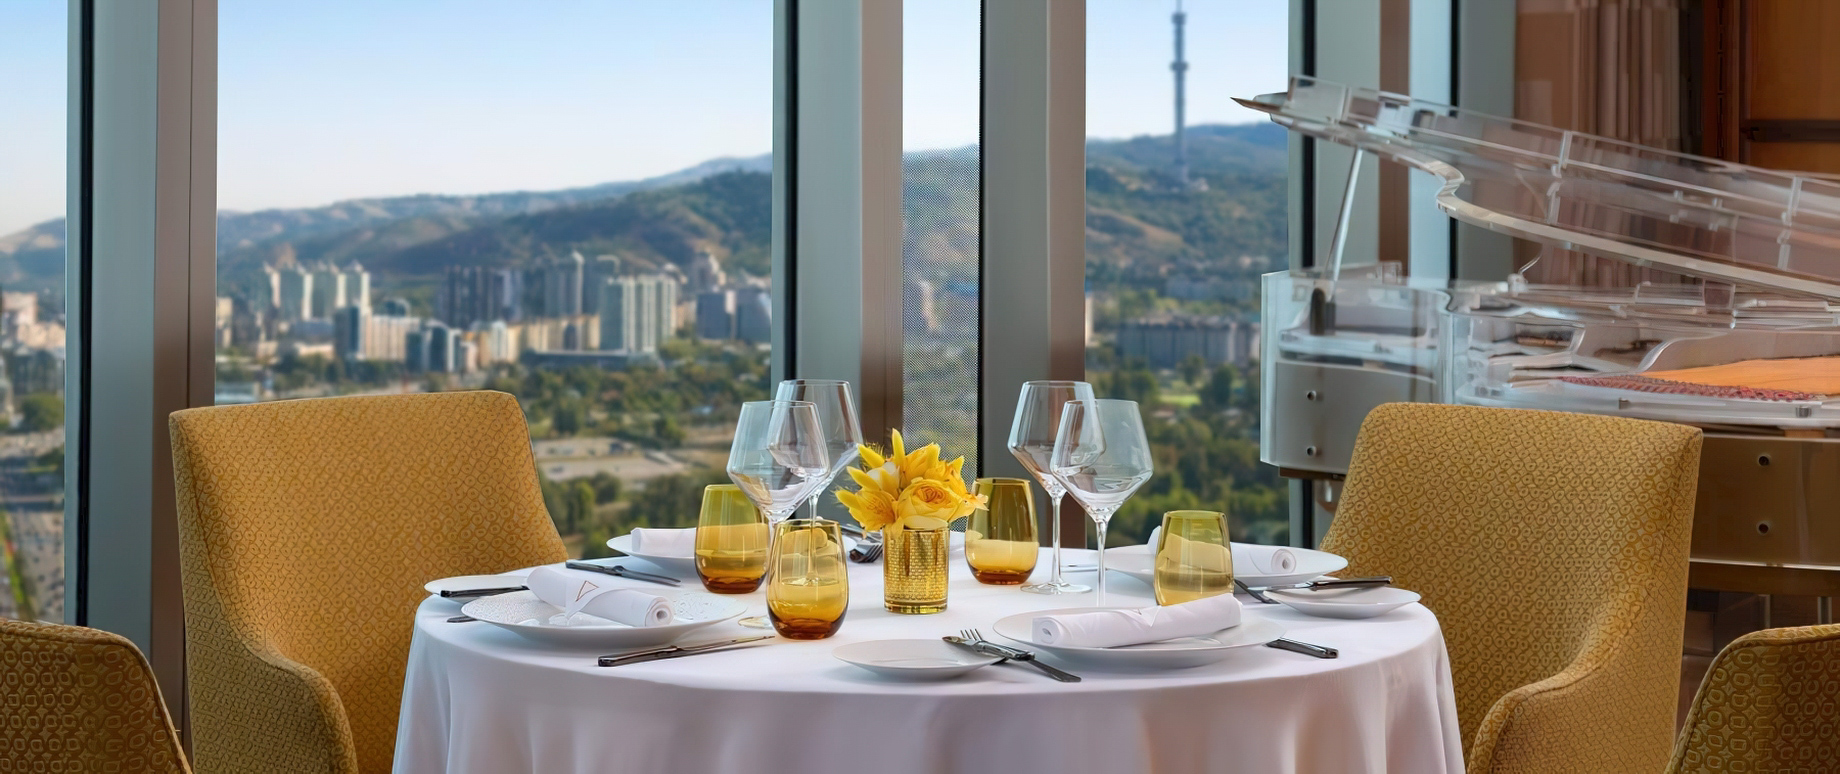 The Ritz-Carlton, Almaty Hotel – Almaty, Kazakhstan – Seven Bar & Restaurant Table Setting